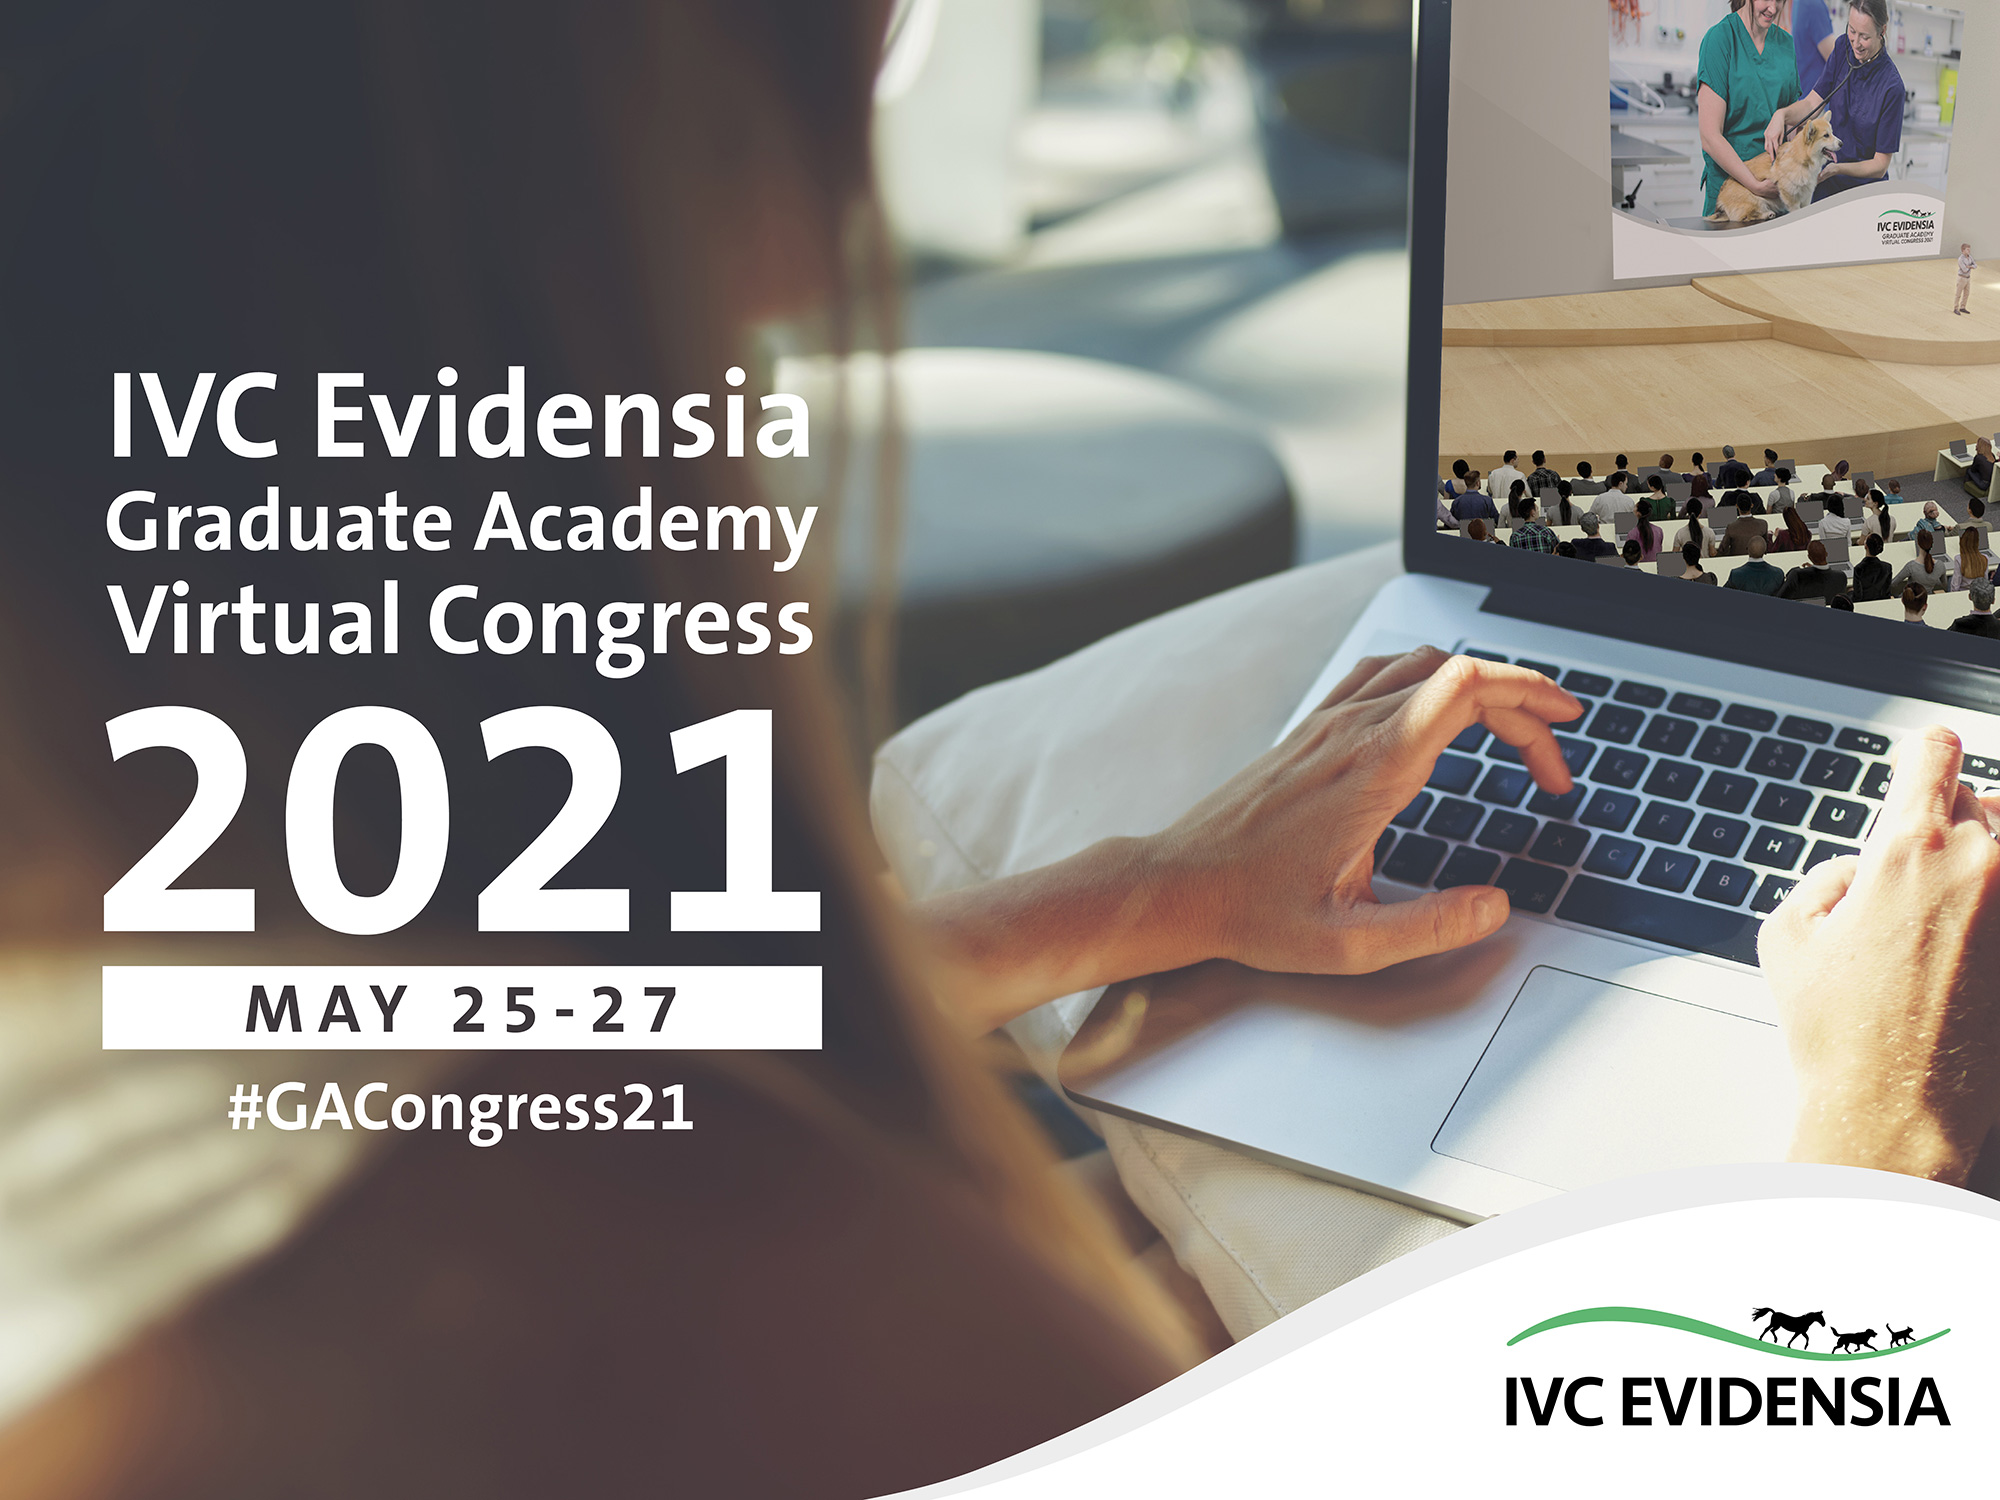 IVC Evidensia Launches 2nd International Graduate Academy Virtual Congress